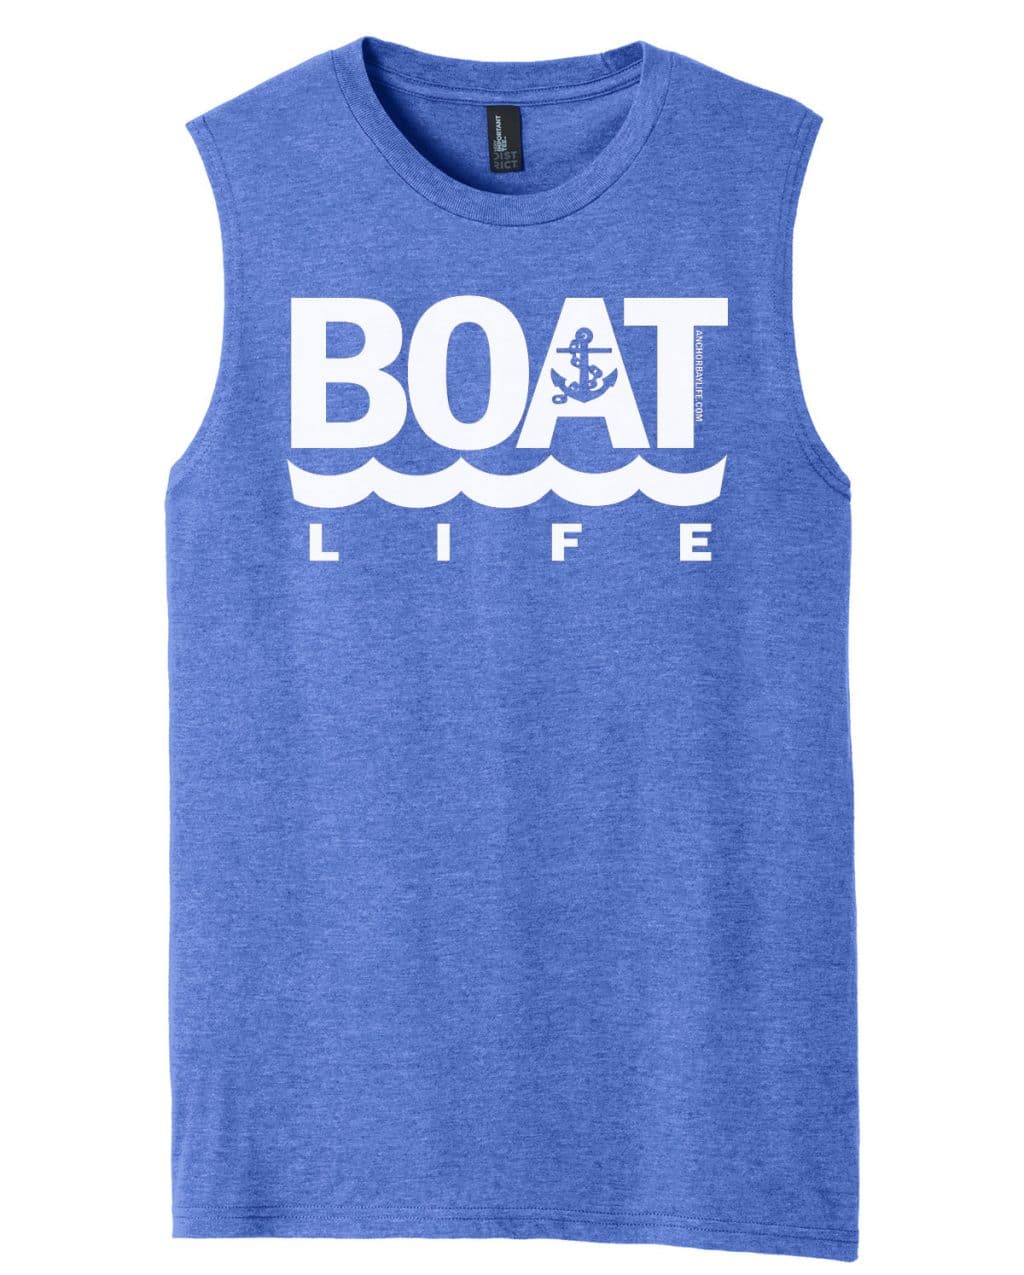 Boat Life Men's Blue Frost Anchor Tank Top Sleeveless Tee